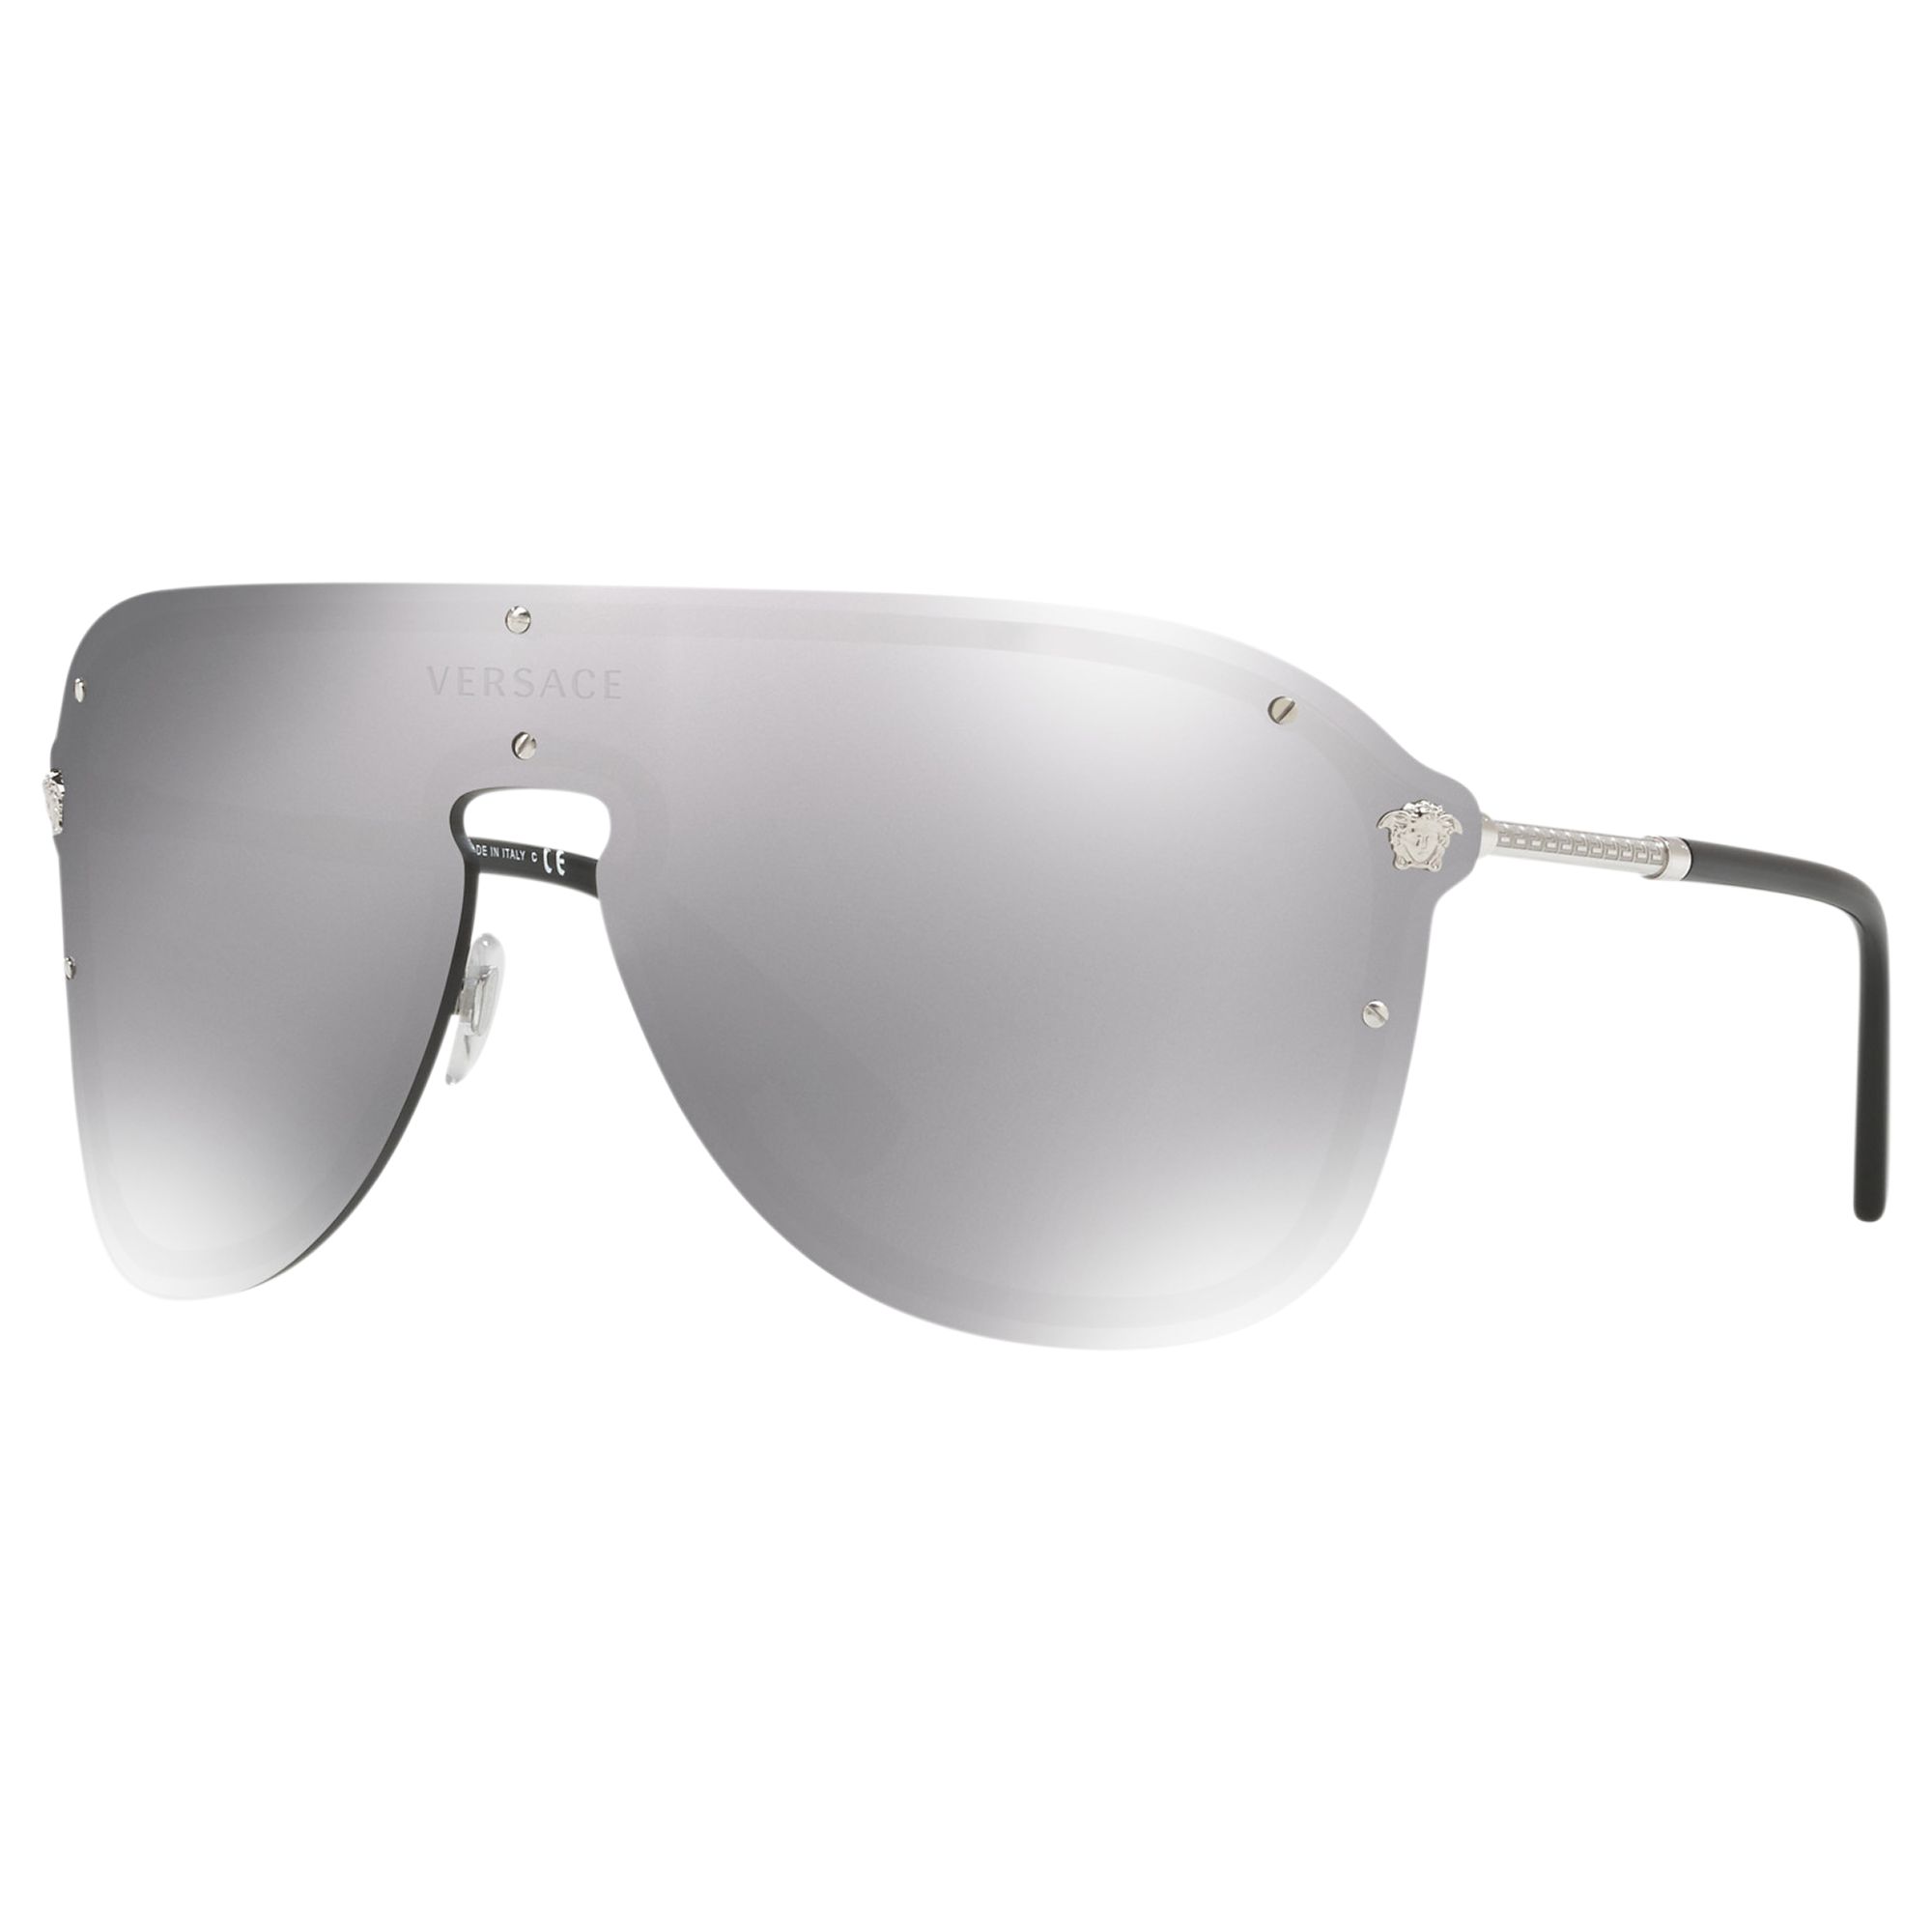 versace polarized sunglasses women's